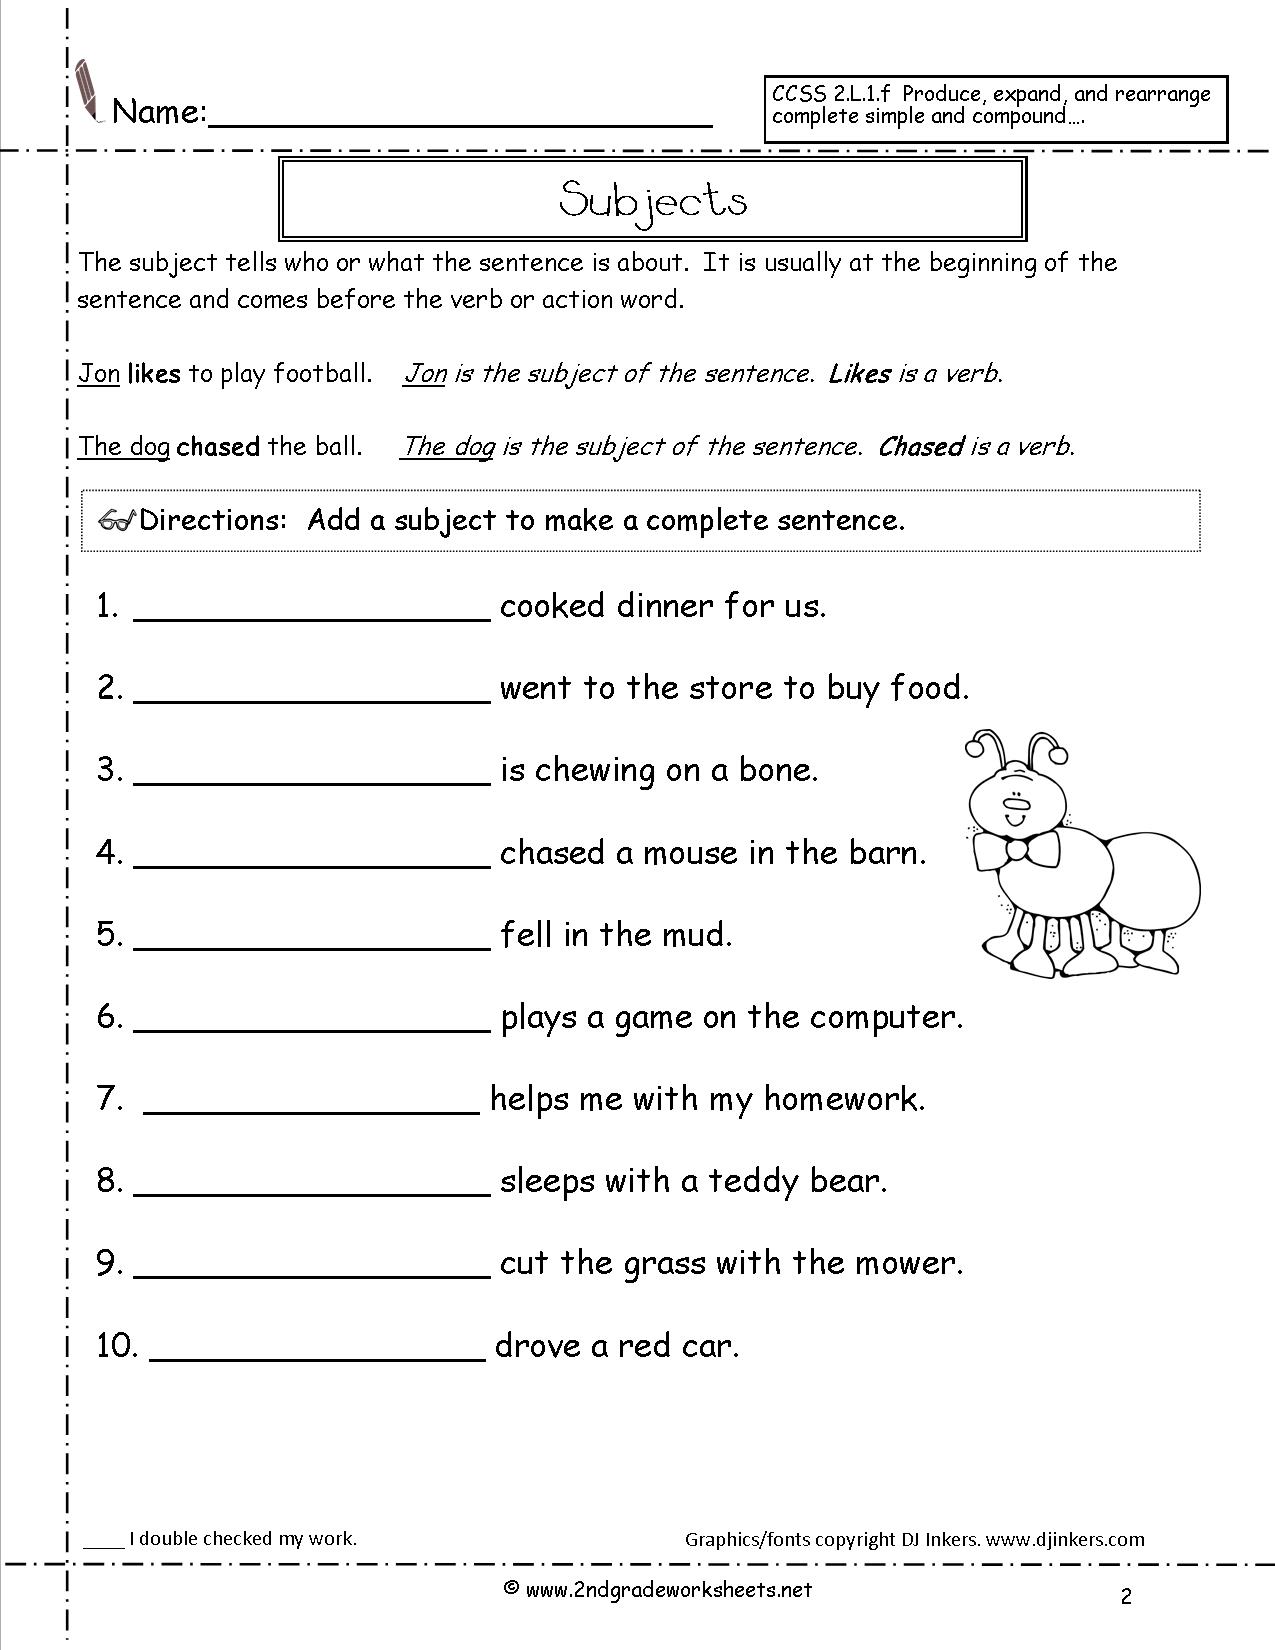 Types of Sentences Worksheet 2nd Grade Image